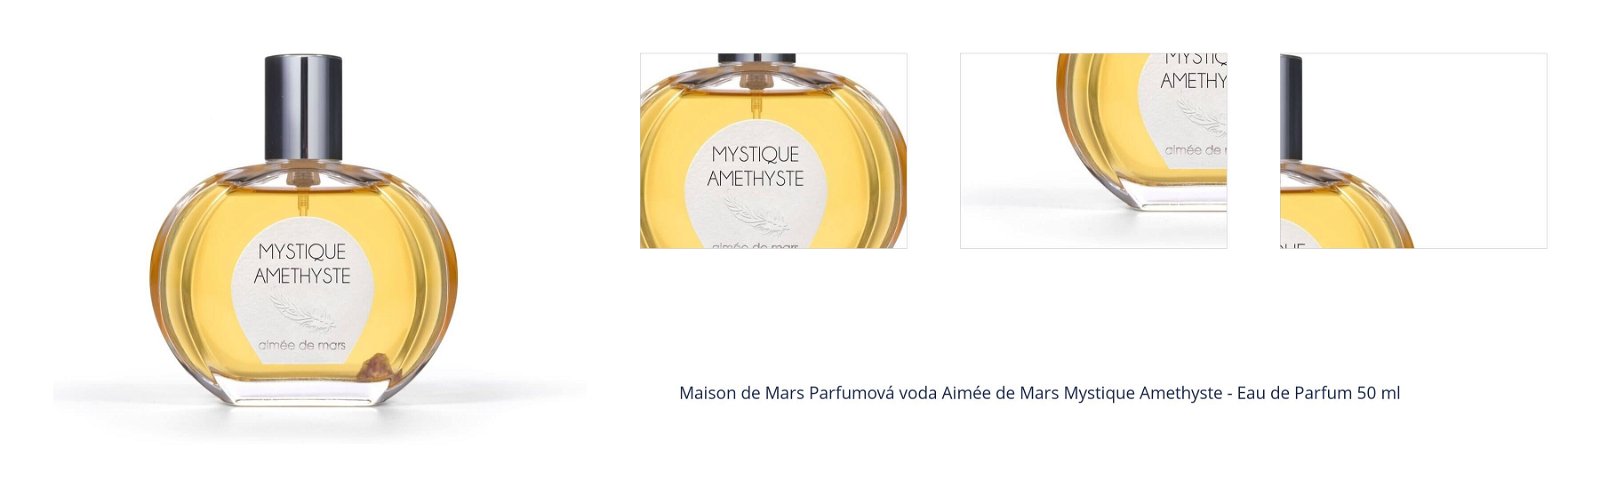 Maison de Mars Parfumová voda Aimée de Mars Mystique Amethyste - Eau de Parfum 50 ml 1